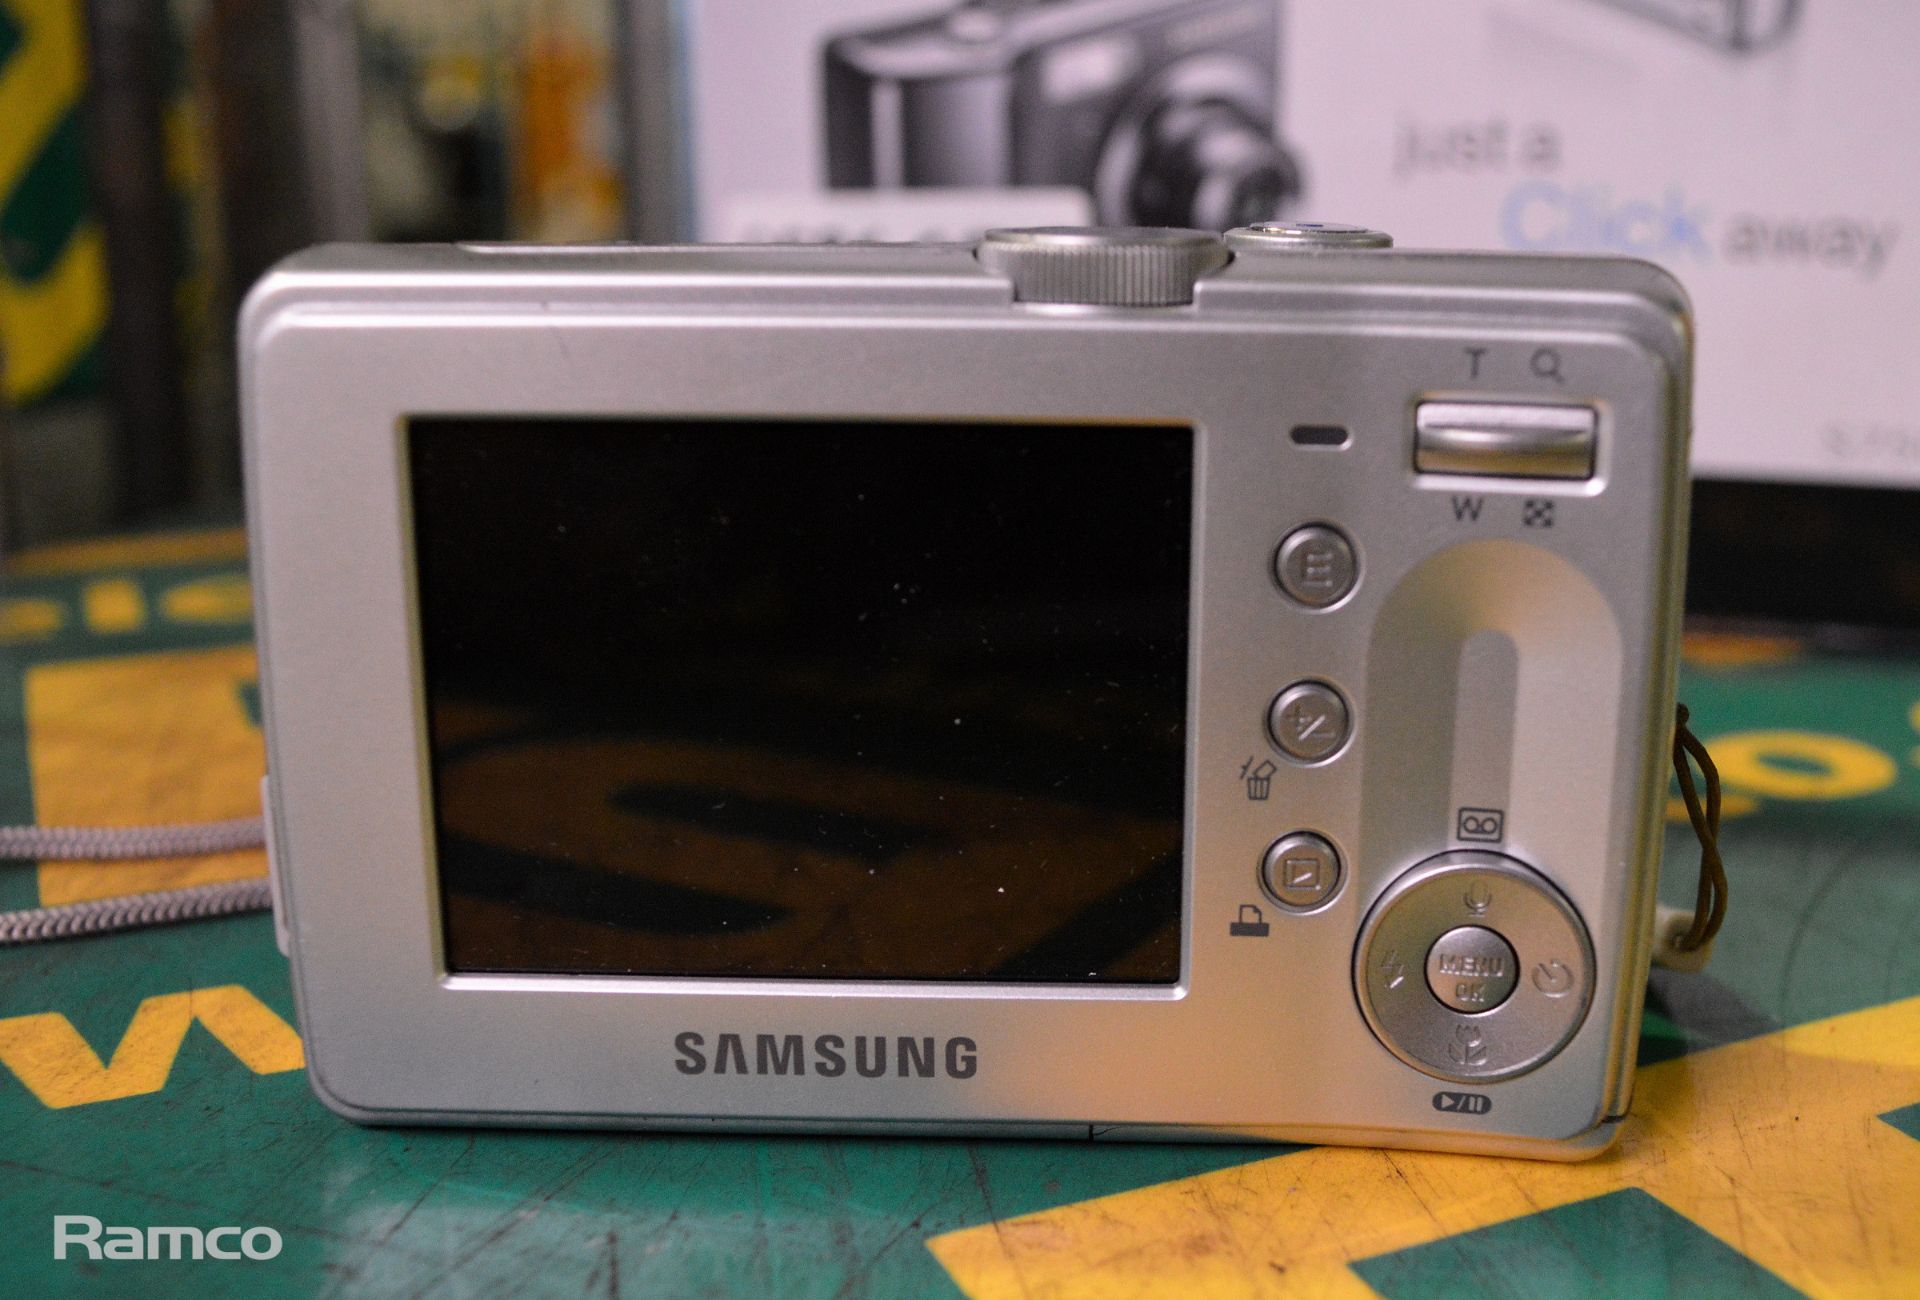 Samsung S750 Digital Camera - Image 3 of 4